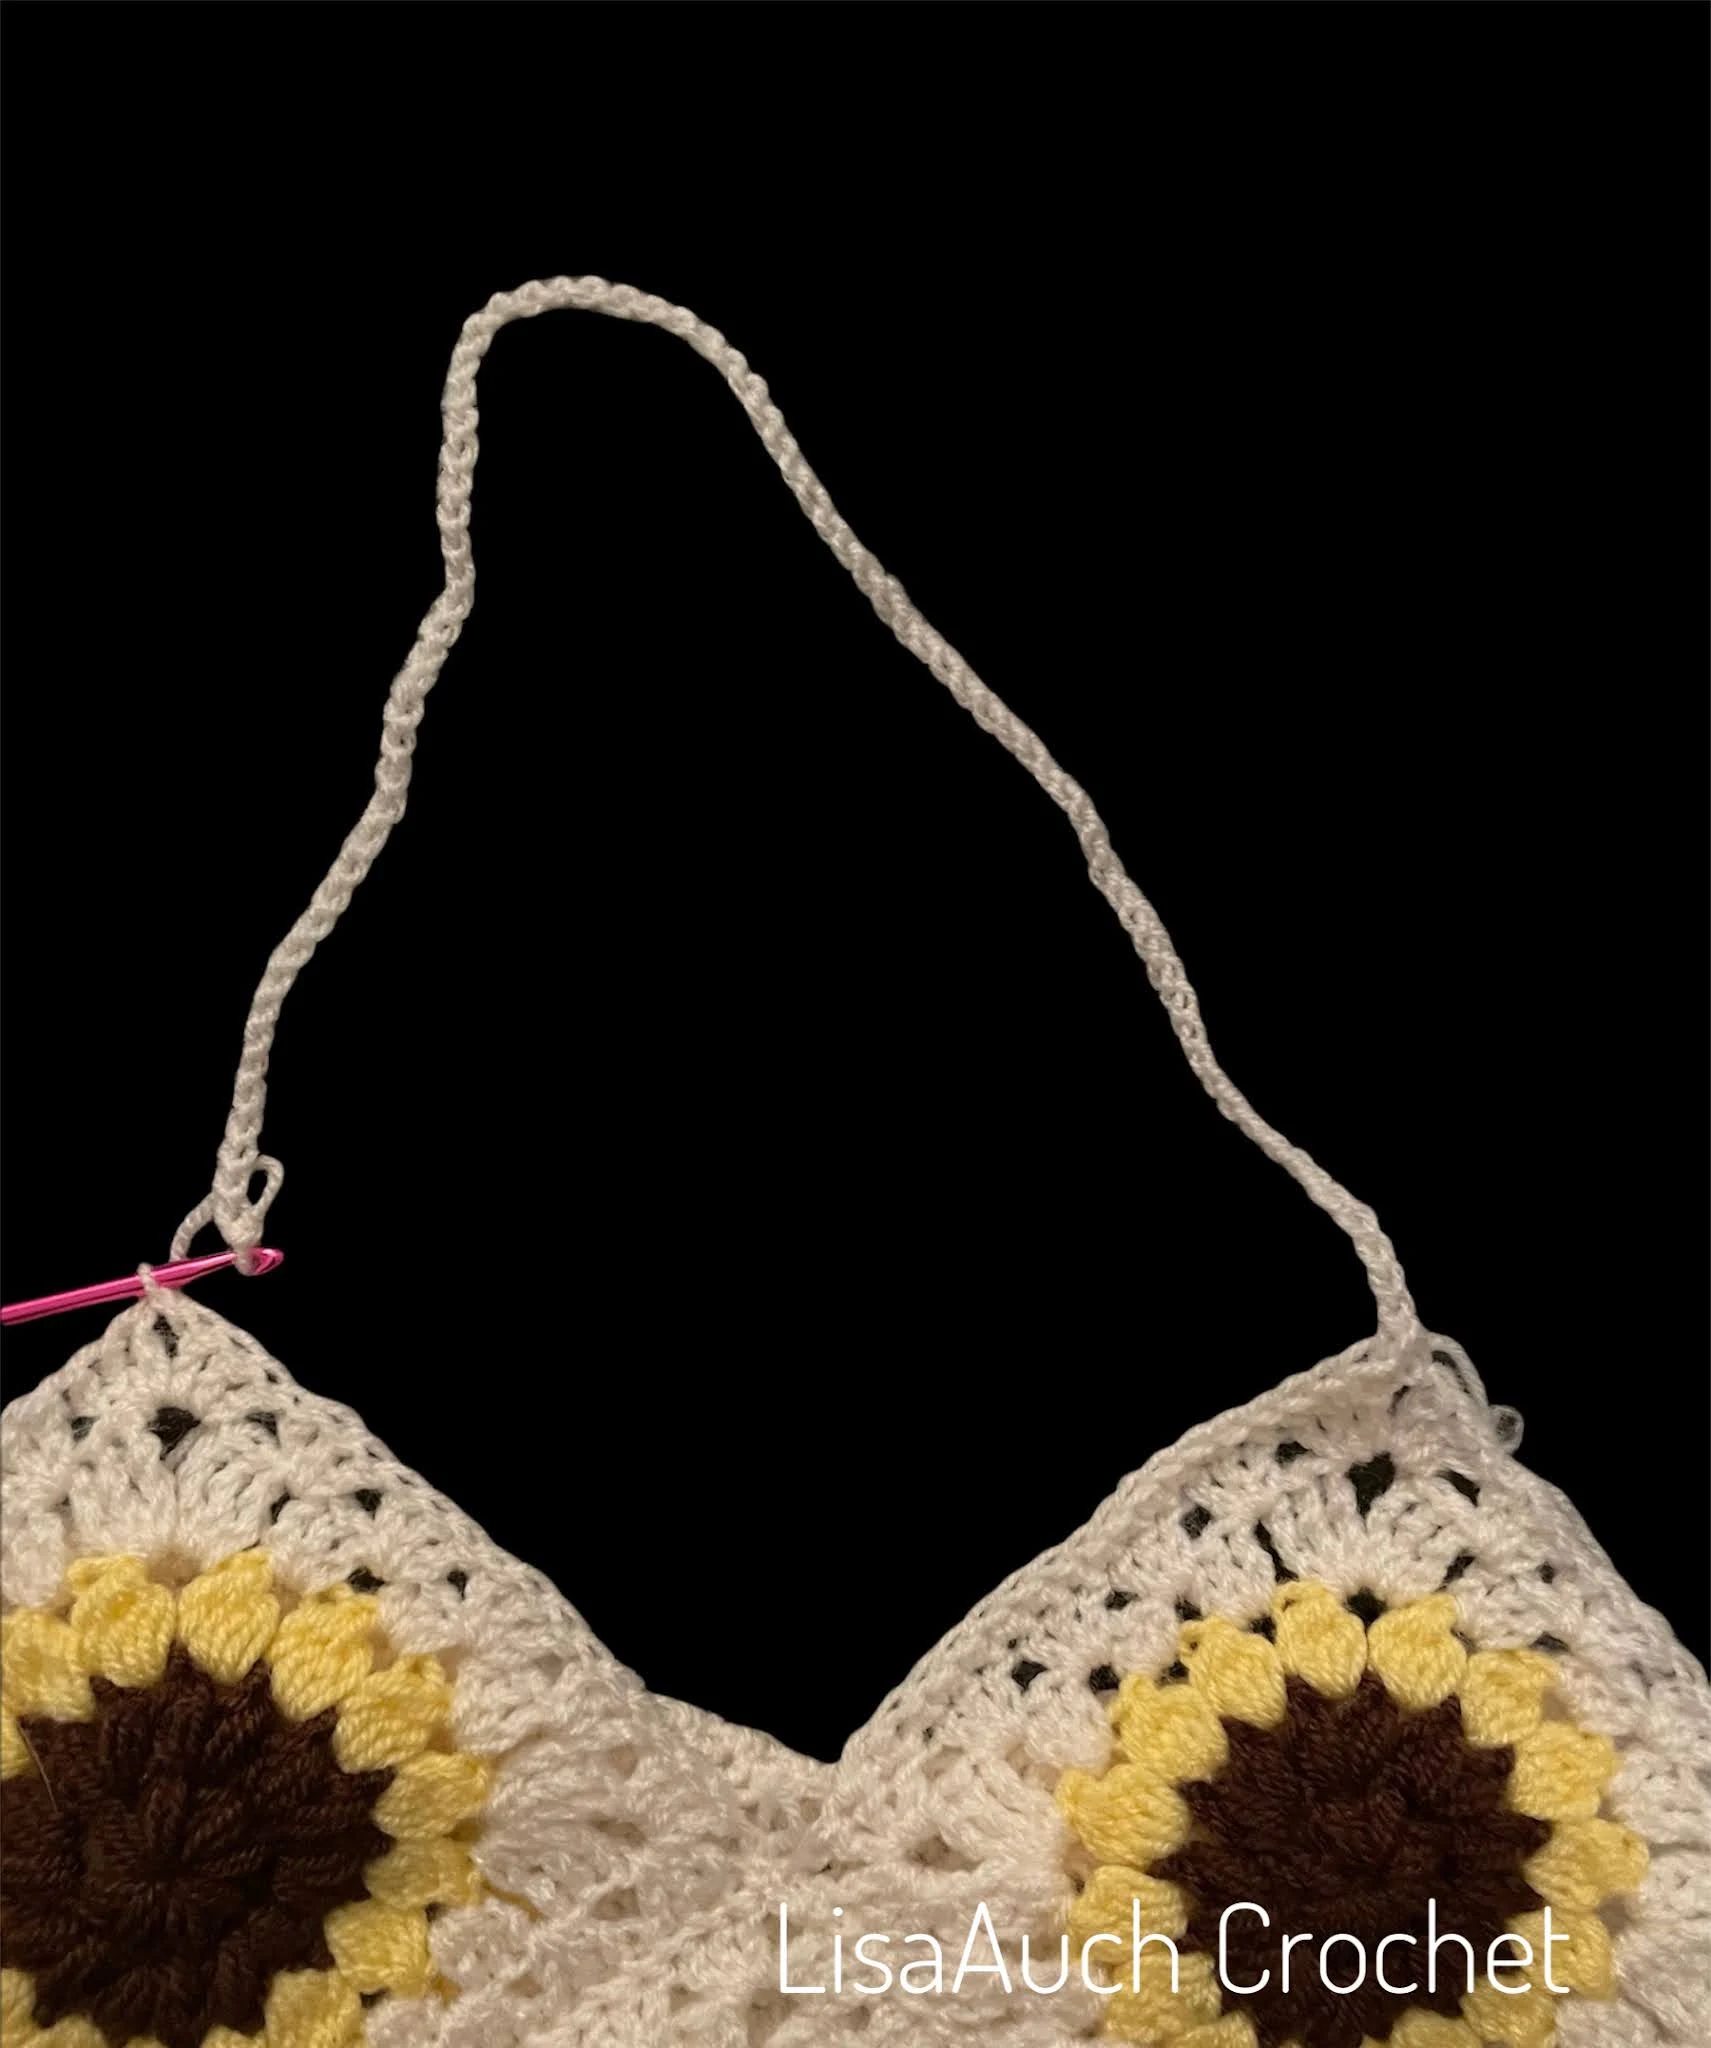 crochet bag layout